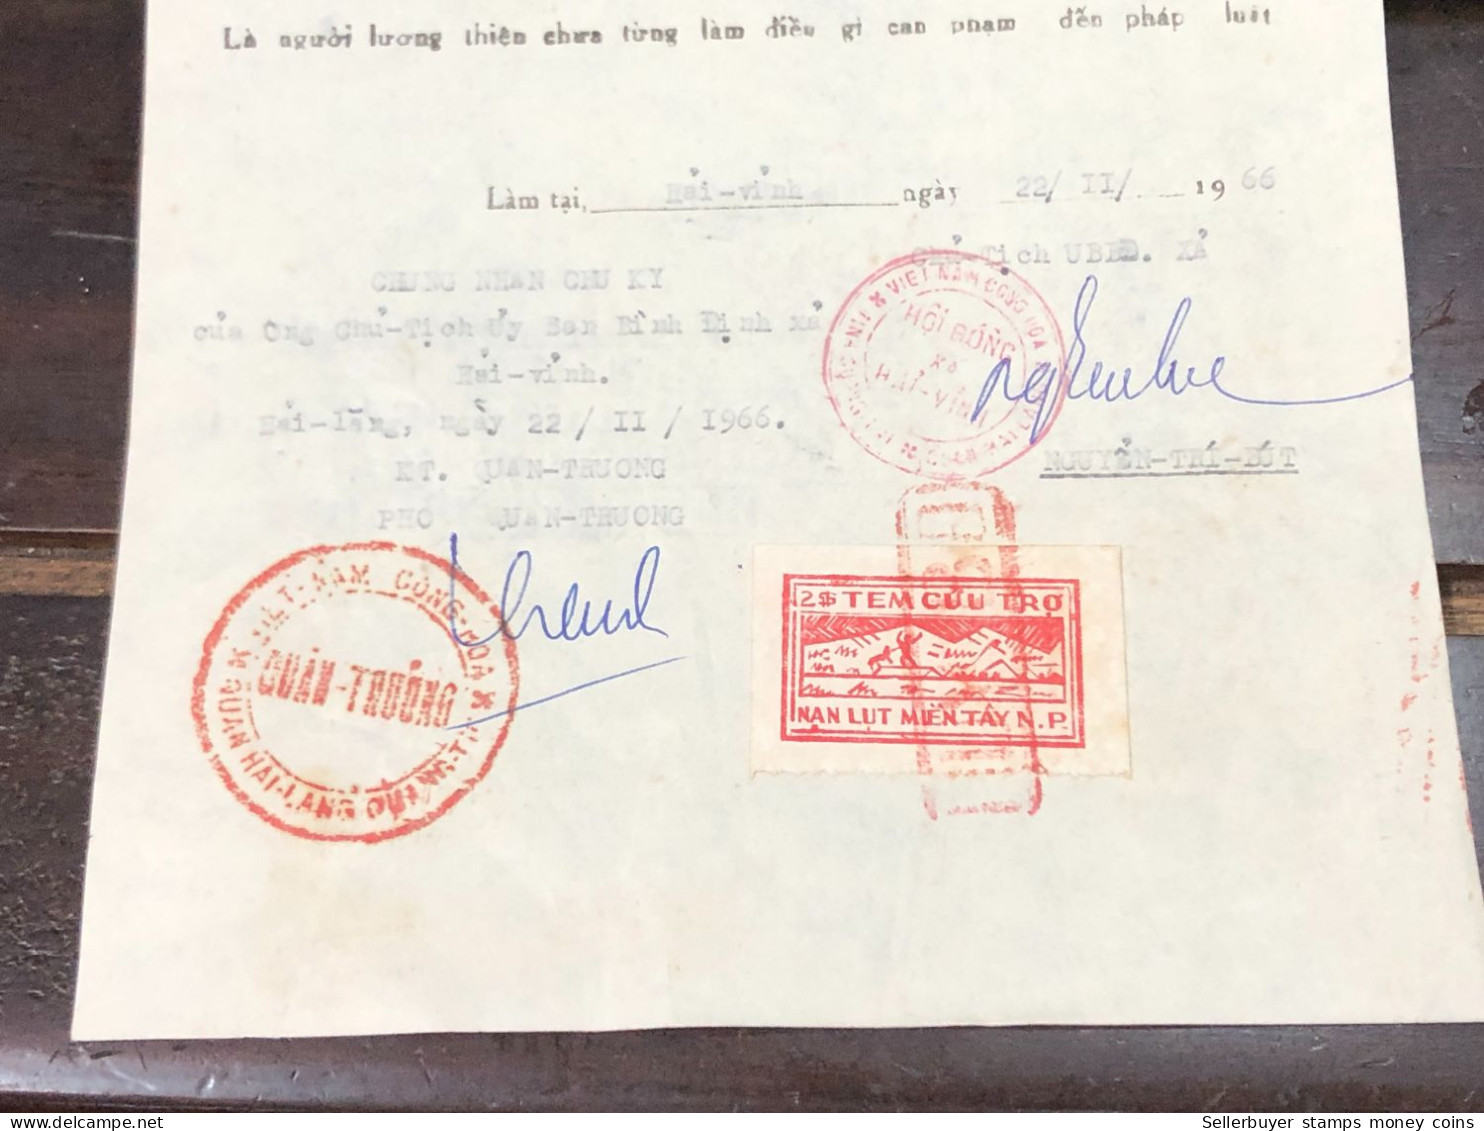 Viet Nam Suoth Old Documents That Have Children Authenticated(2$ Tem Cuu Tro1966) PAPER Have Wedge QUALITY:GOOD 1-PCS Ve - Collezioni